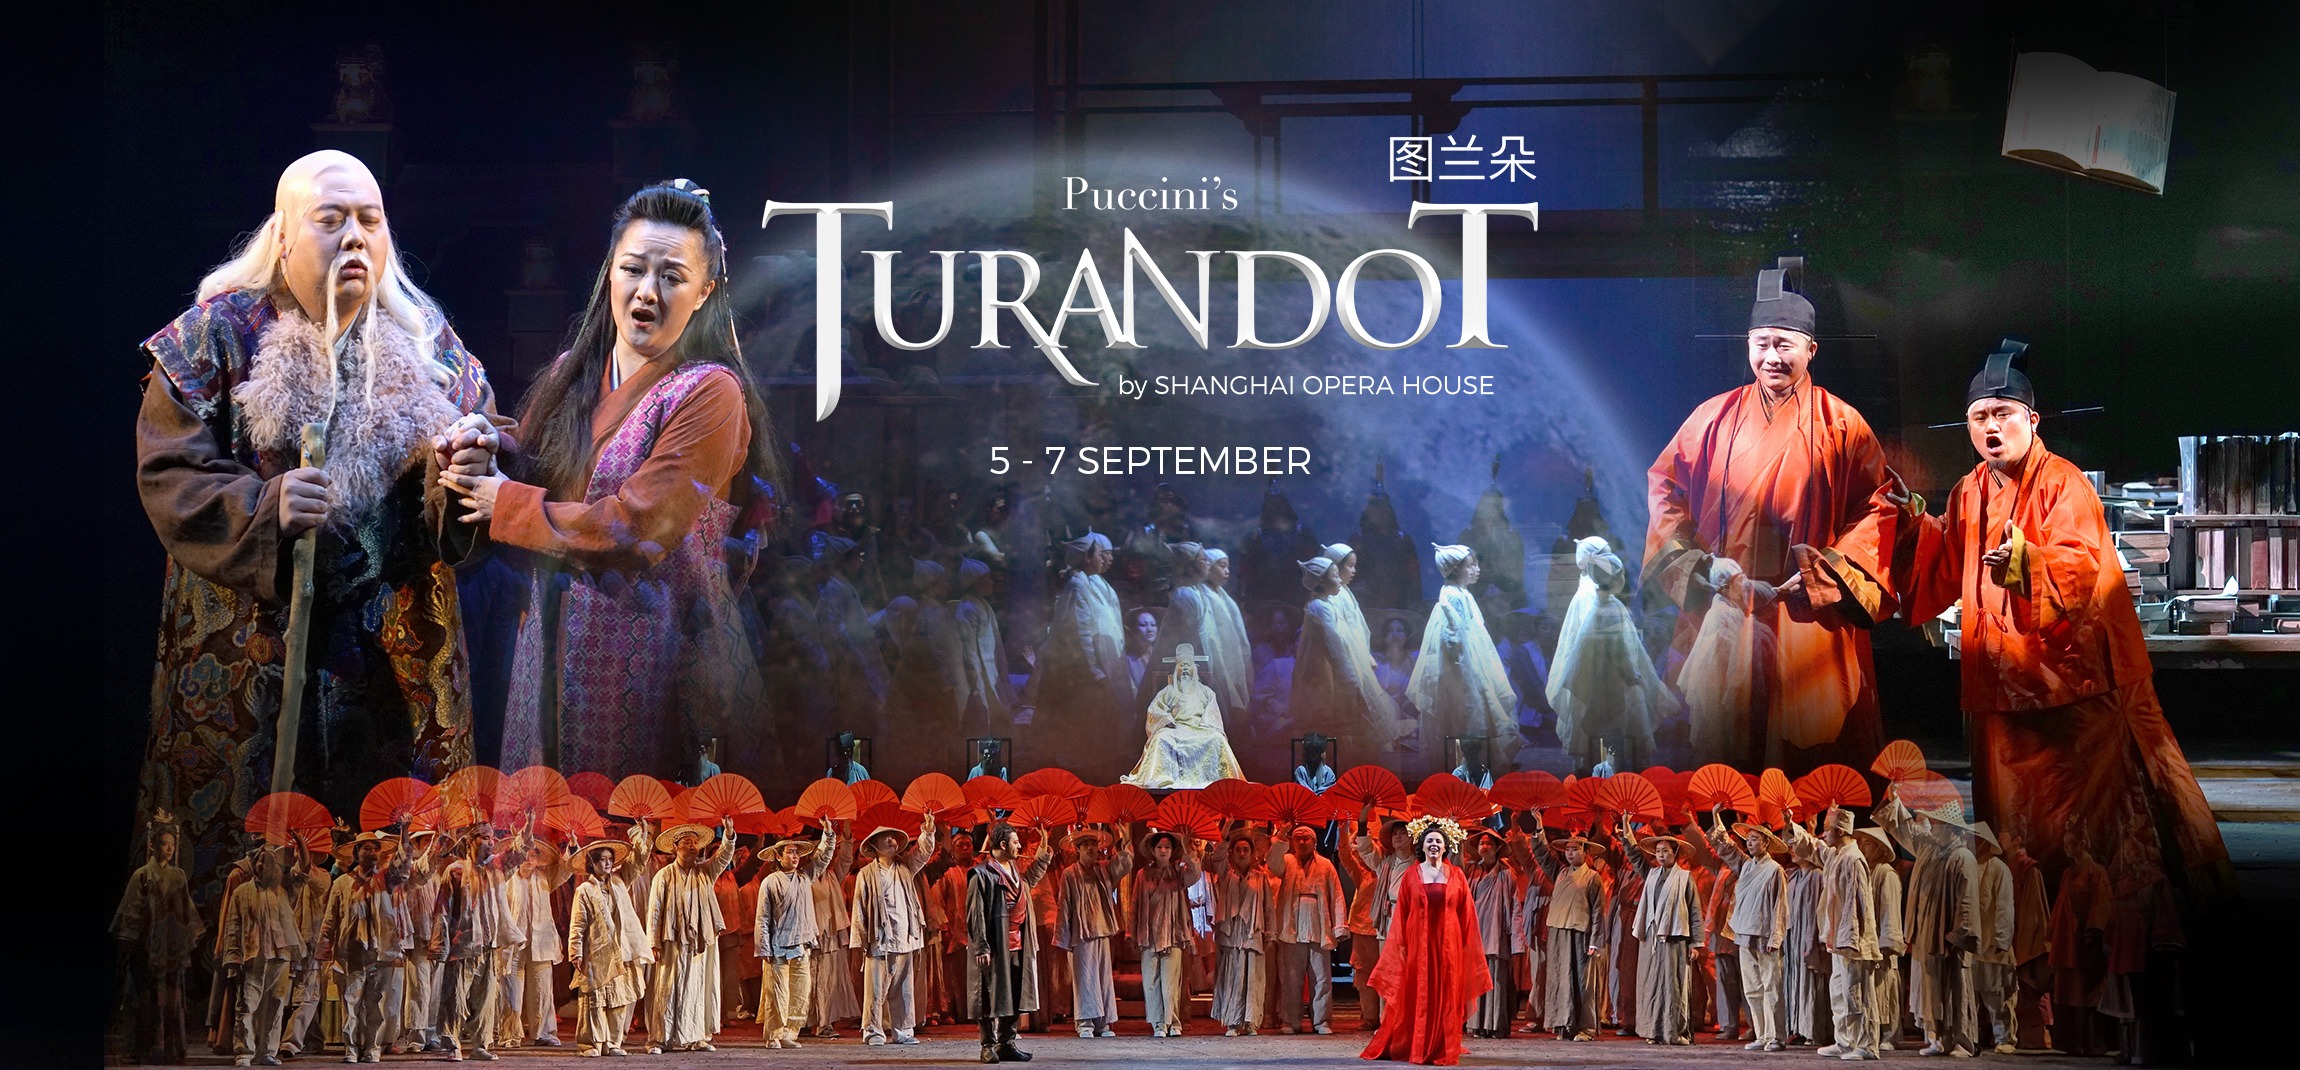 Turandot by Shanghai Opera House - Coming Soon in UAE